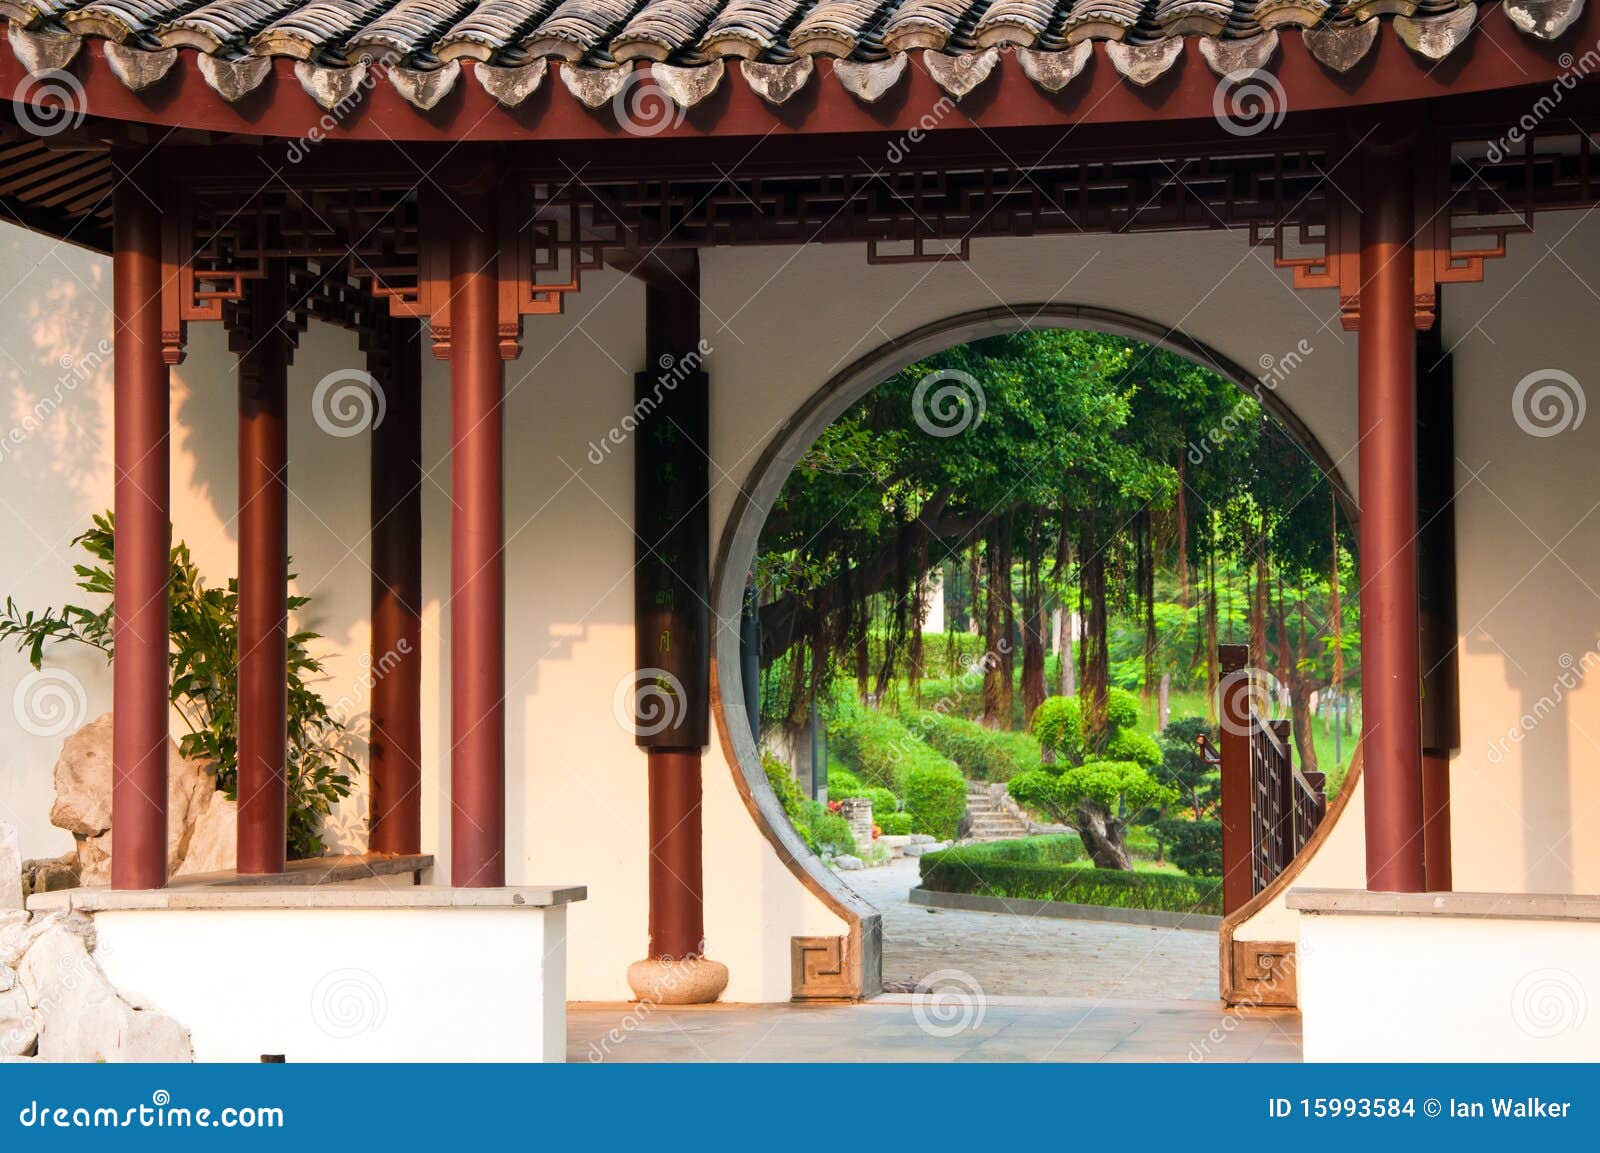 kowloon walled city garden, hong kong.